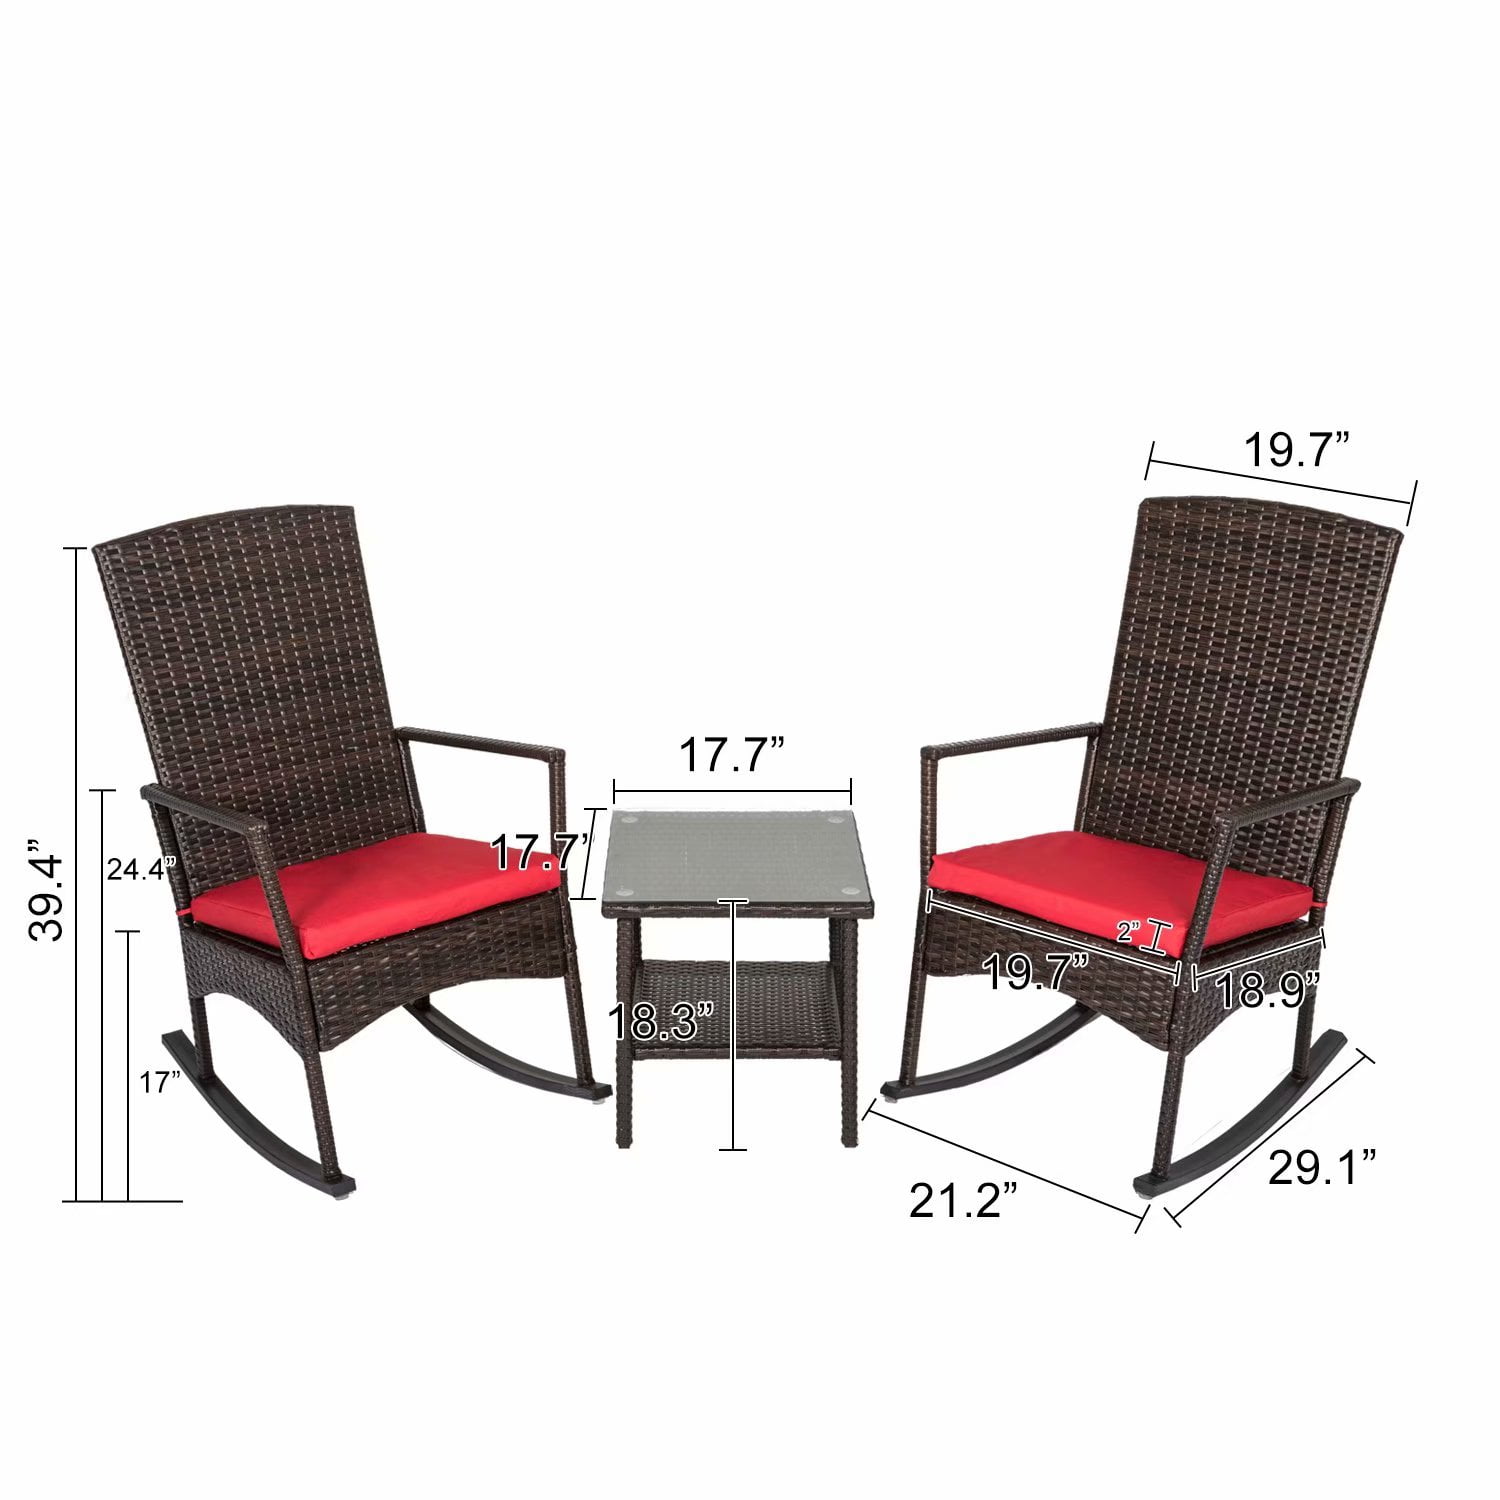 Kinbor 3pcs Wicker Rattan Rocker Chair Side Tea Table Set Garden Rocking Lounge Chair W Removable Cushion Walmart Com Walmart Com